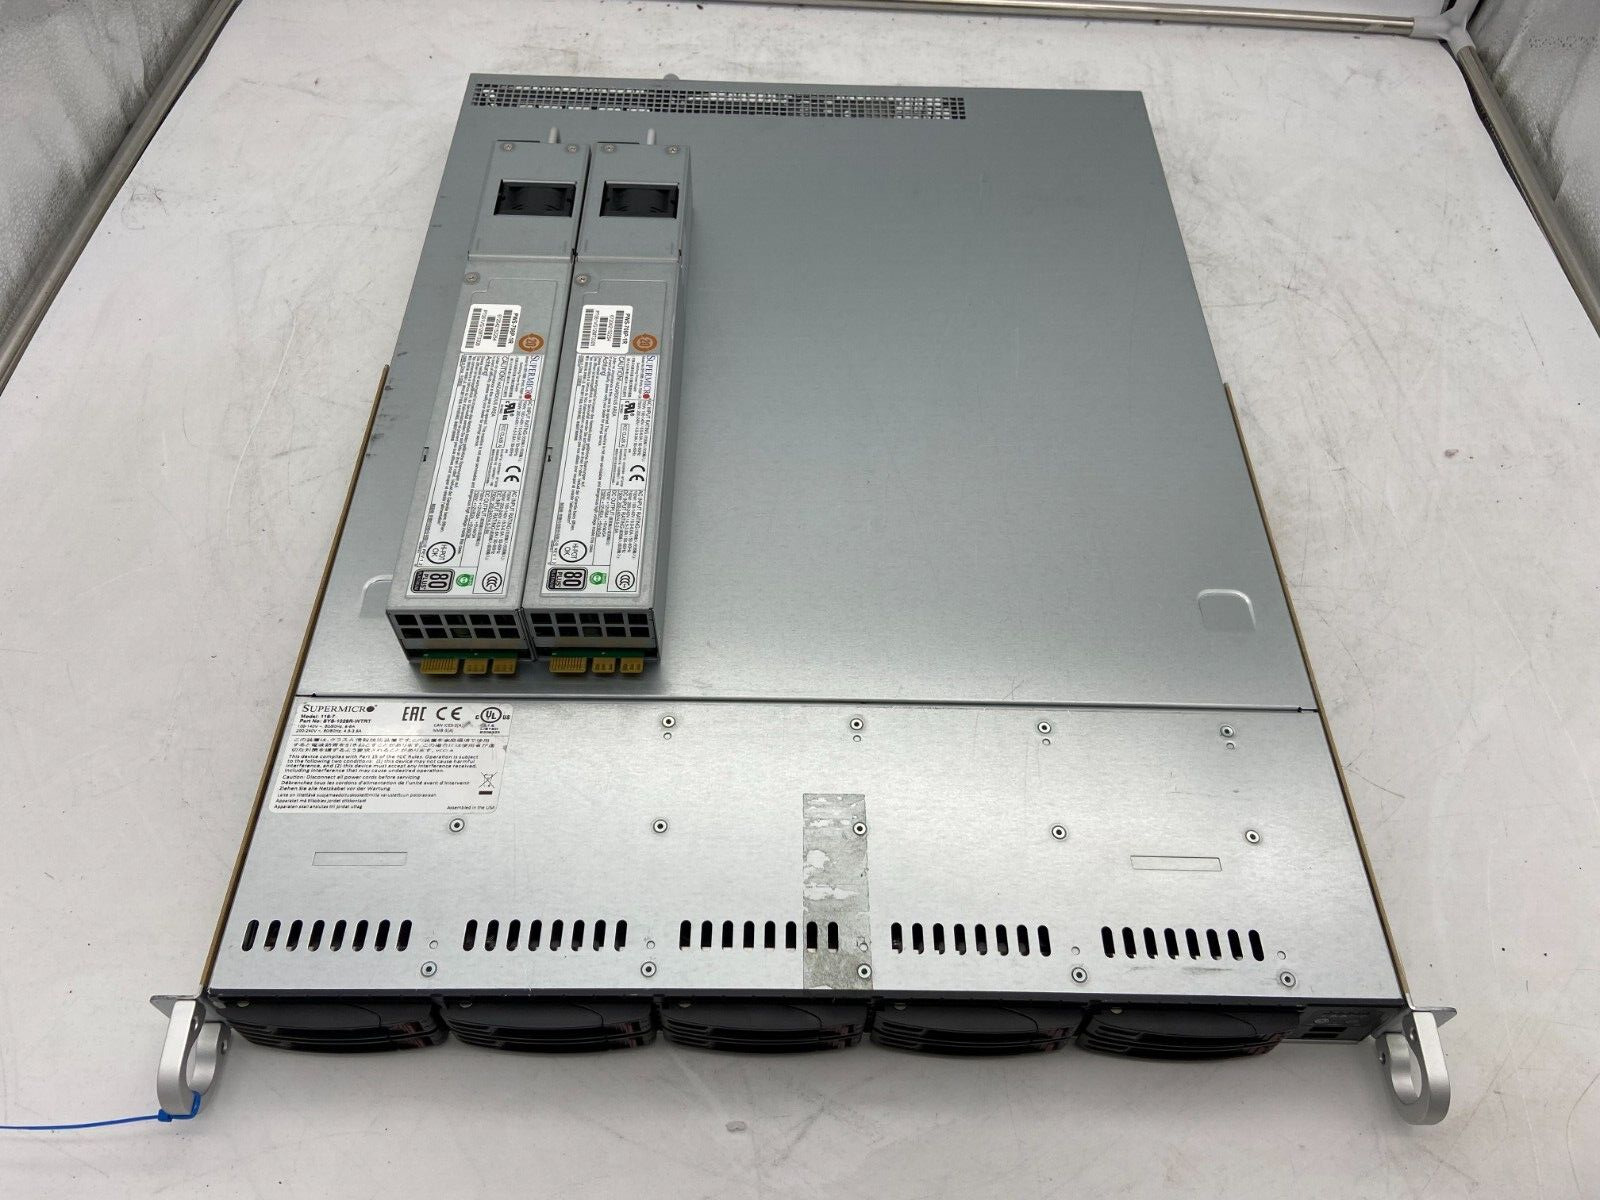 8x 240GB SSD 1U Rackmount Deduplication Compression Backup RAID Server X10DRW-iT